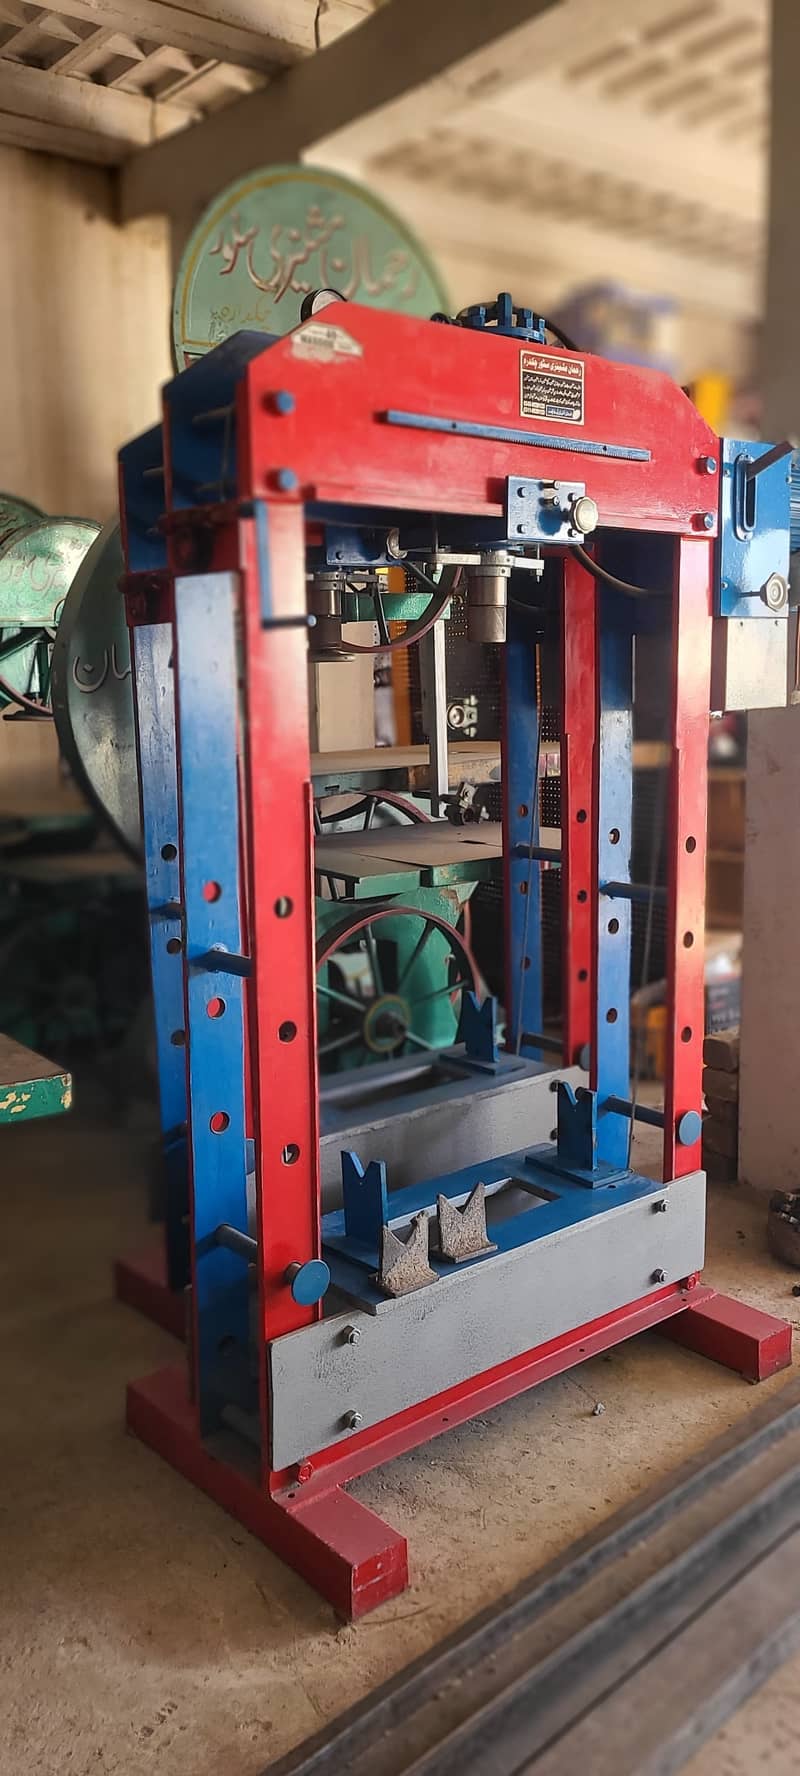 Ara Machine,Hydraulic Press Machine, Lathe Machine /CNC Router machine 18